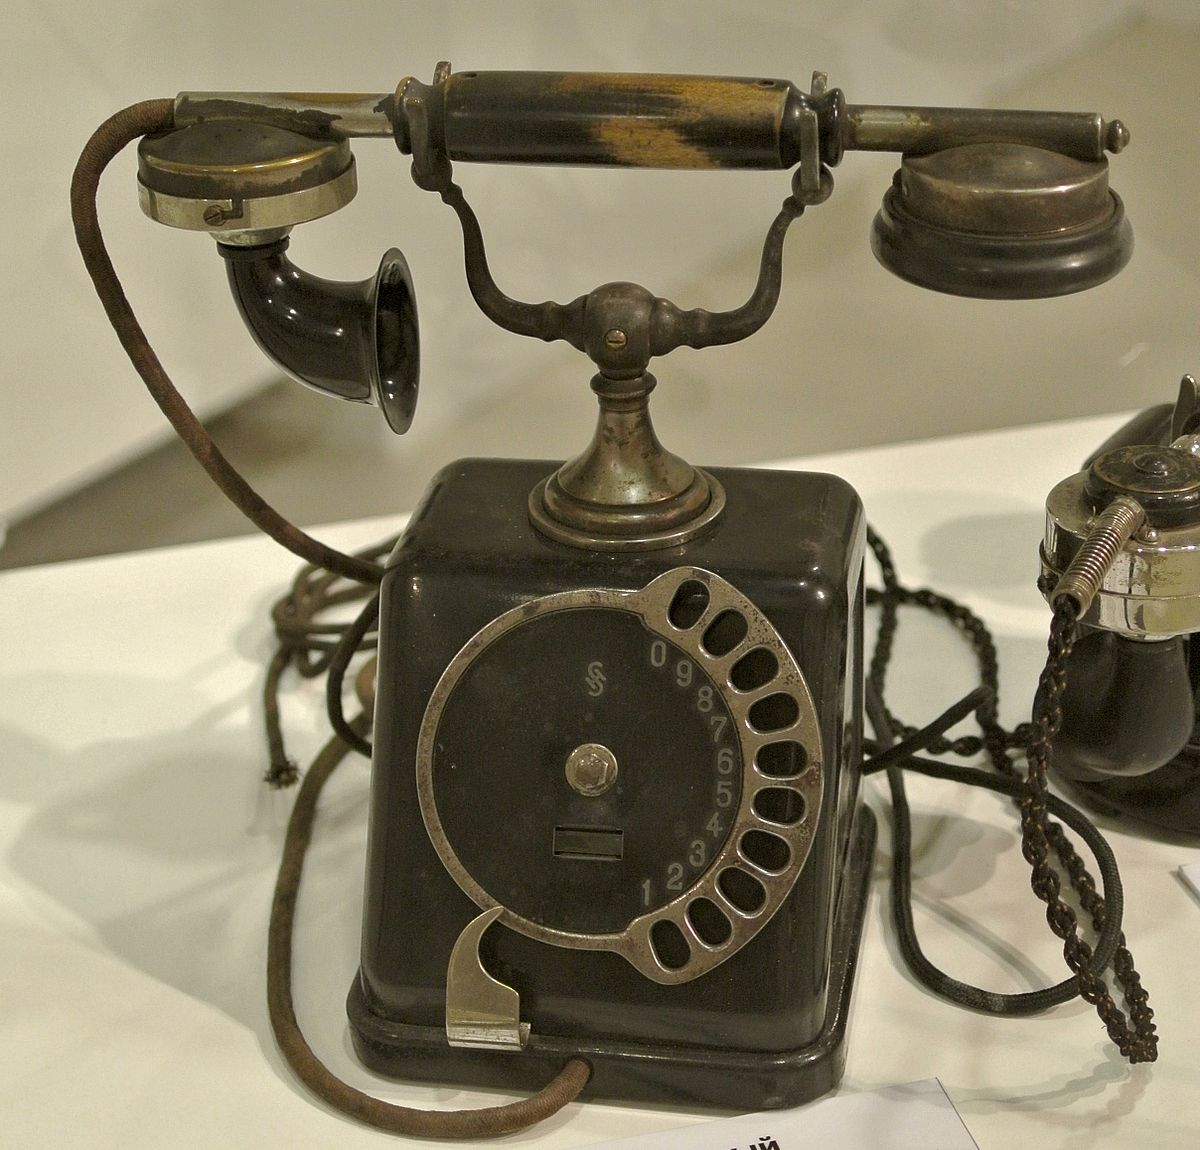 История старого телефона. ЭЛМОН Браун Строуджер. Siemens & Halske ZBSA 19. Телефонный аппарат Бойля 1896. Телефонный аппарат Эриксон 1910 года.